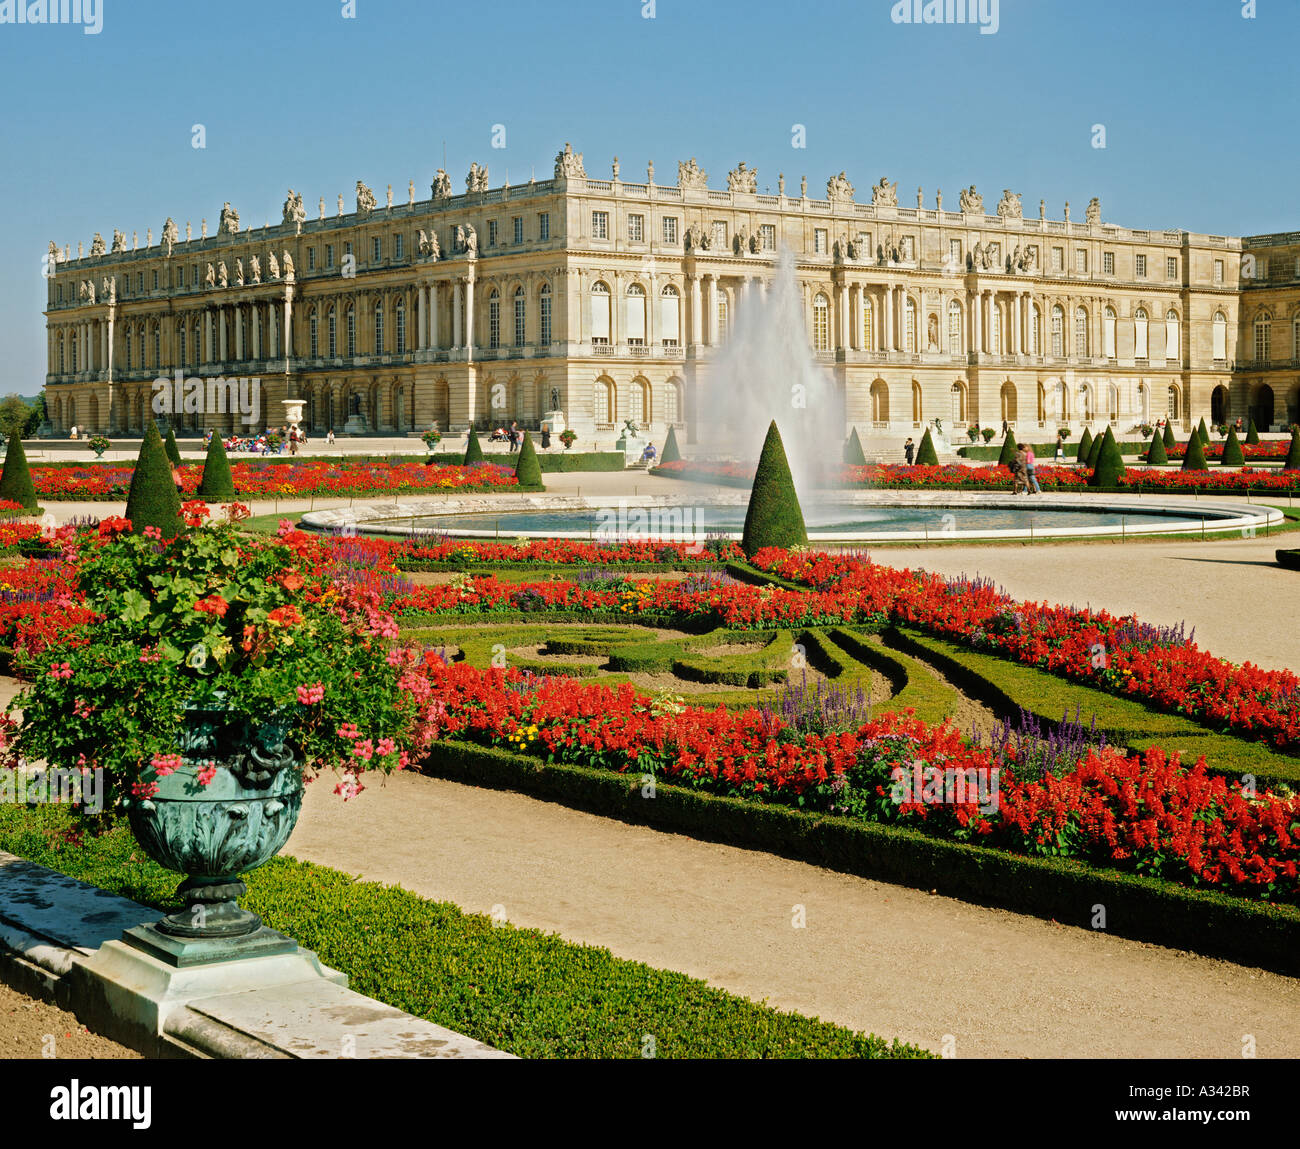 Versailles Palace Garden Flowers Immagini e Fotos Stock - Alamy